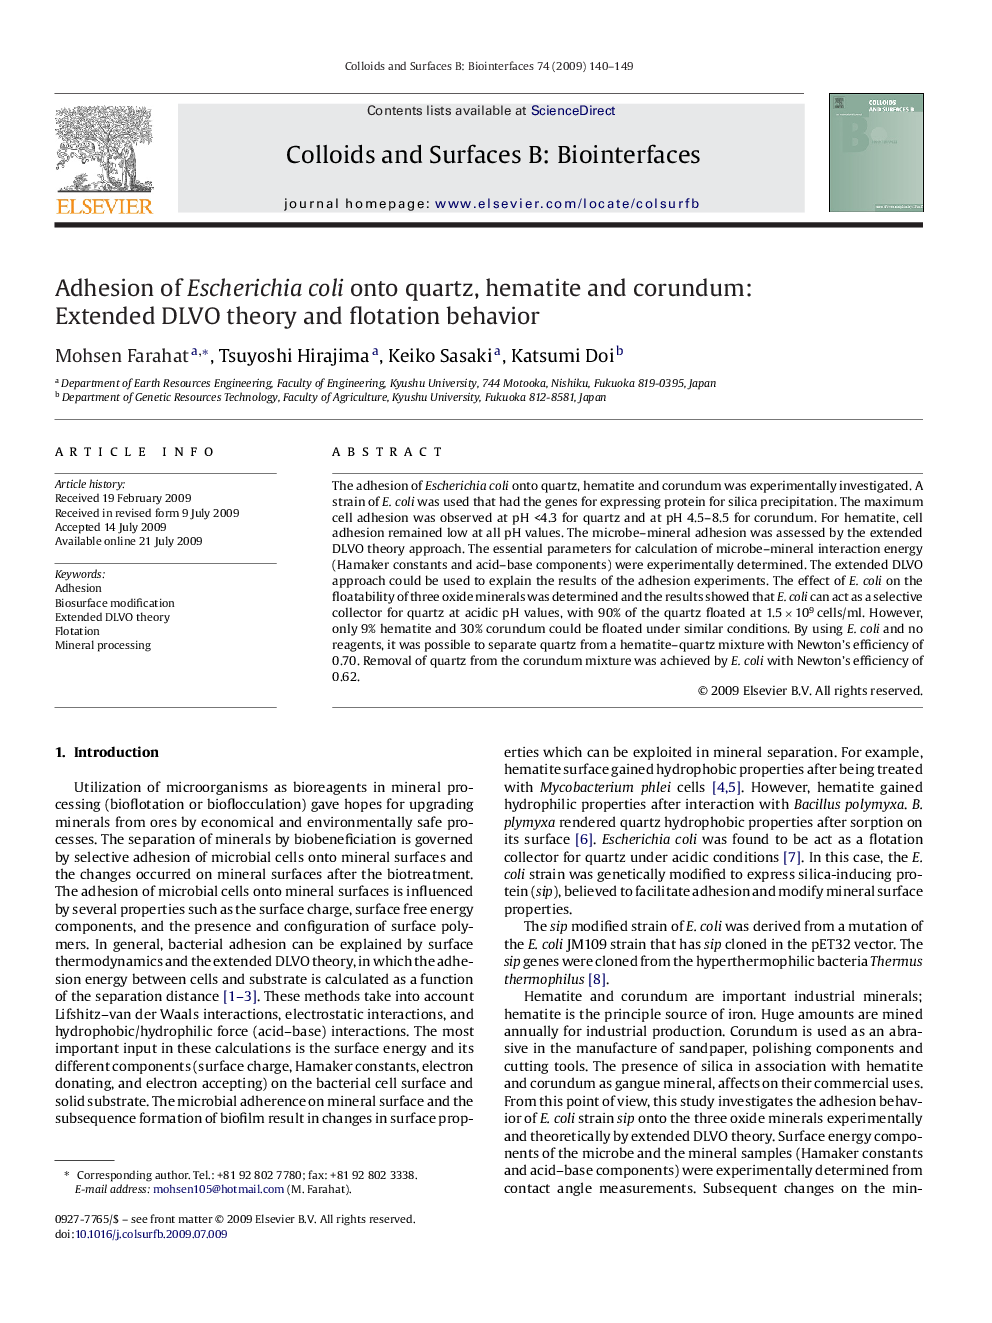 Adhesion of Escherichia coli onto quartz, hematite and corundum: Extended DLVO theory and flotation behavior